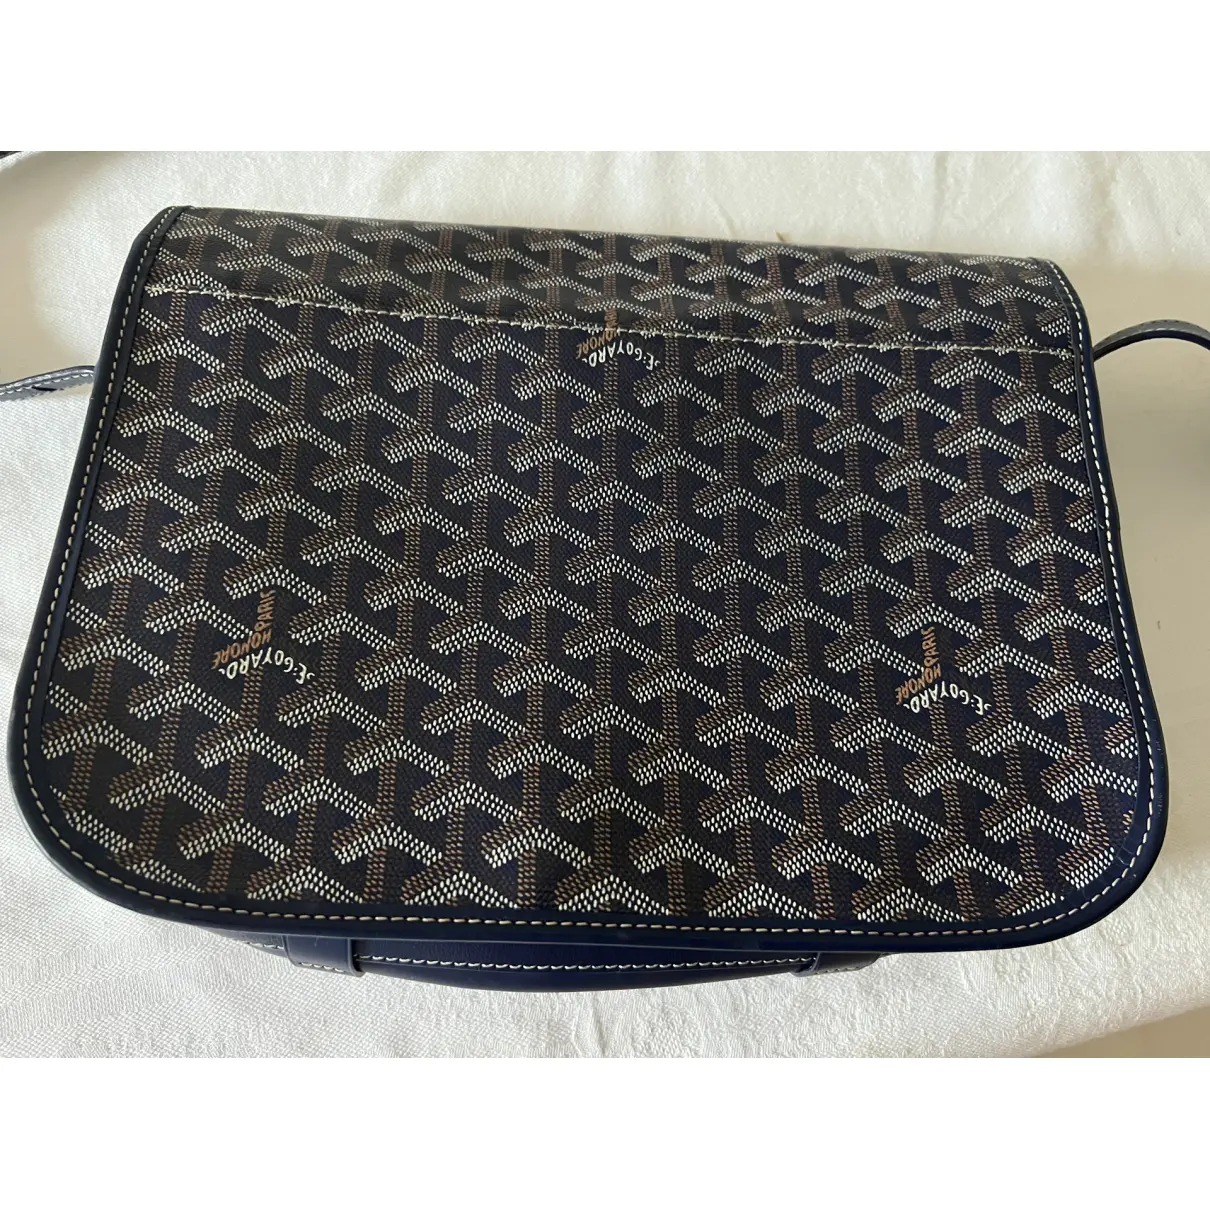 Buy Goyard Belvedère leather handbag online